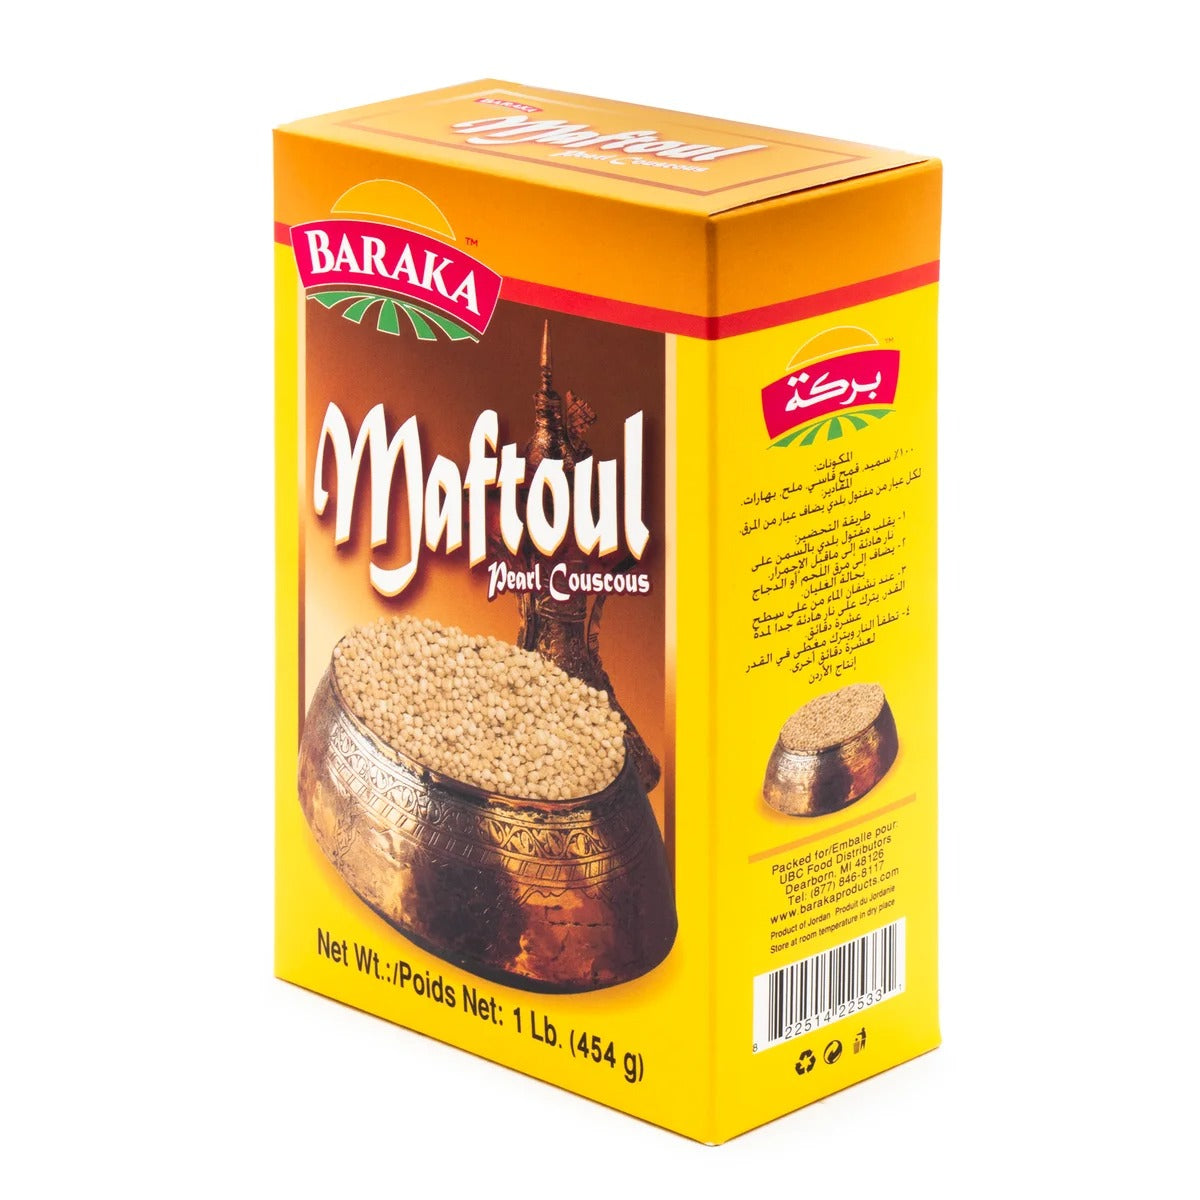 Baraka- Maftoul Pearl Couscous